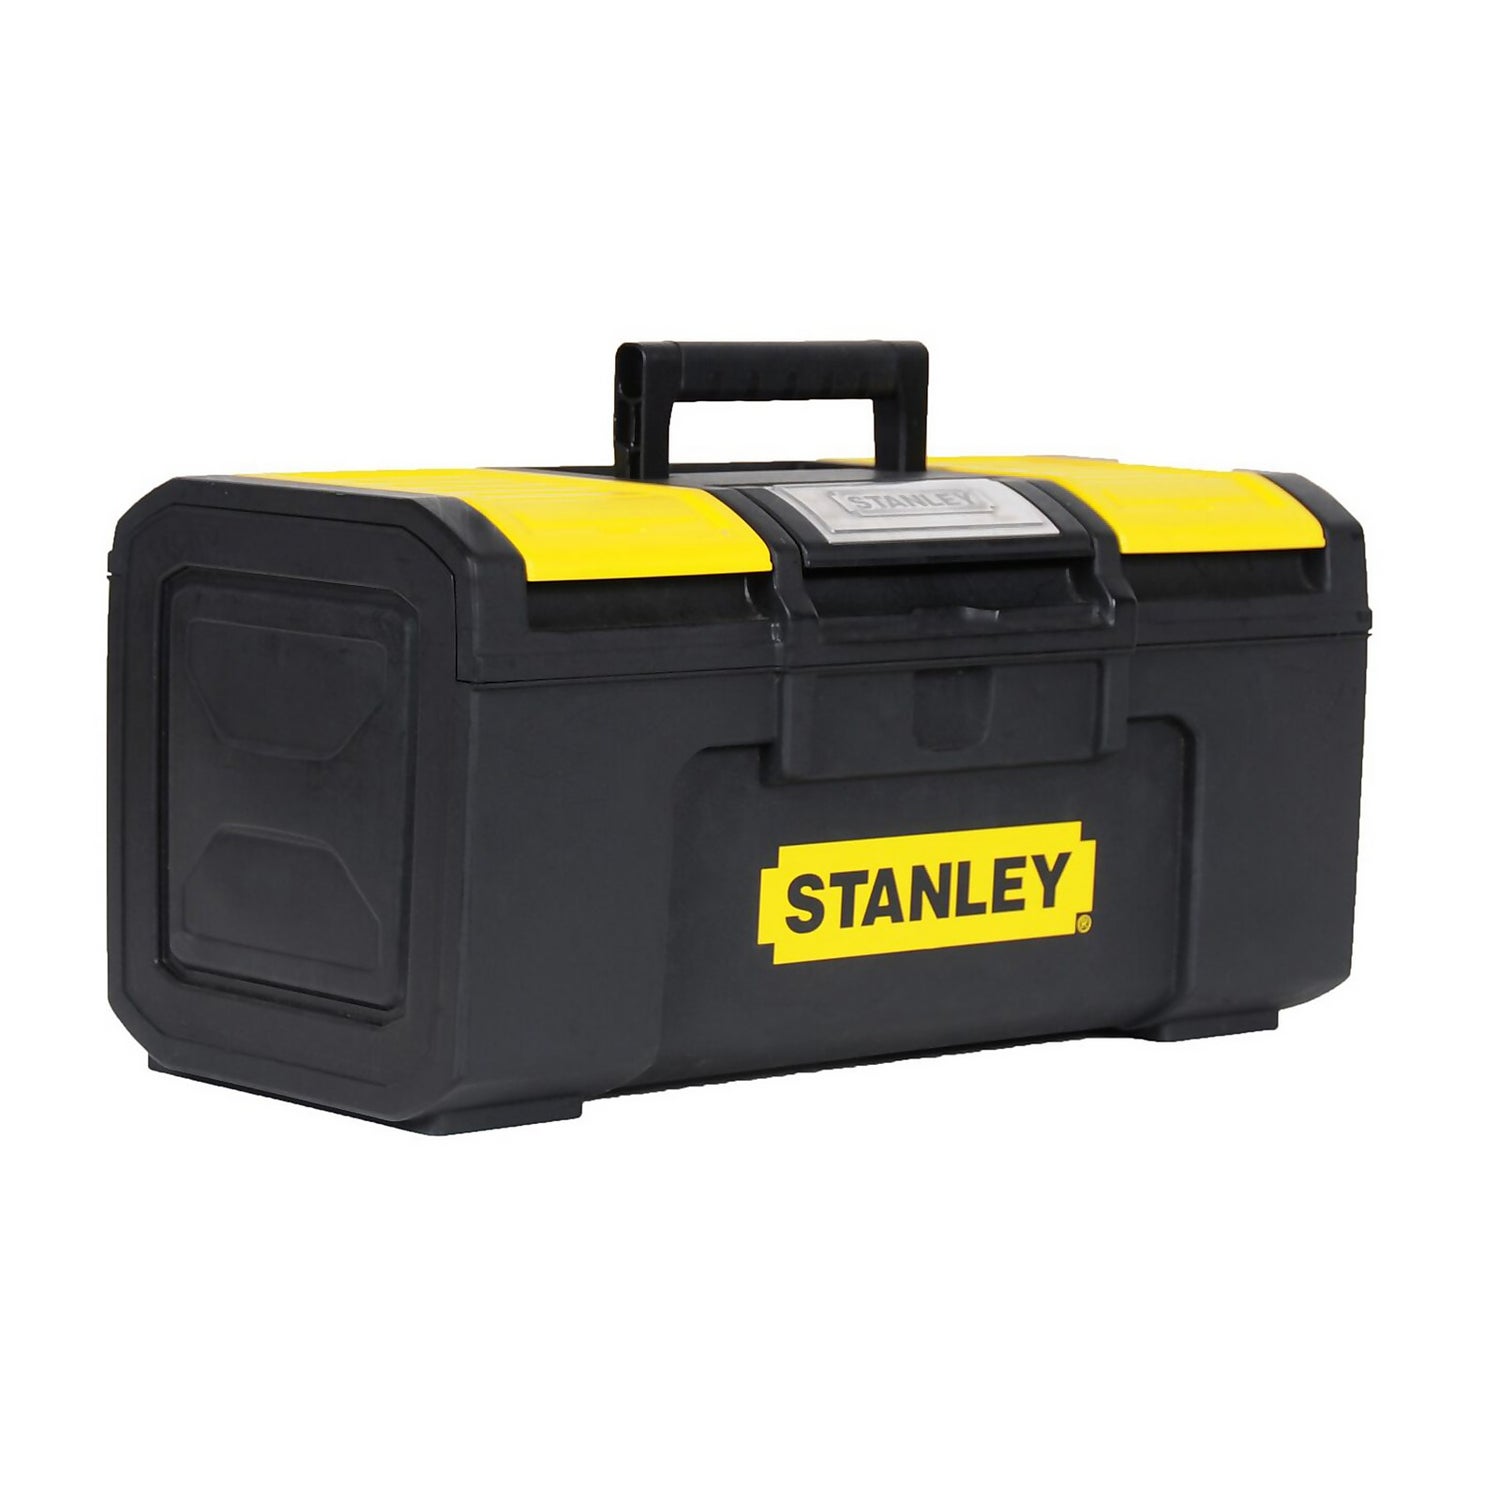 Toolbox 1.19. Ящик для инструментов Stanley 19 toolboks. Ящик для инструмента Stanley line Toolbox 16" 1-79-216 [1-79-216]. Ящик Stanley 1-79-216. Ящик для инструментов Stanley BASICTOOLBOX 19" (1-79-217).